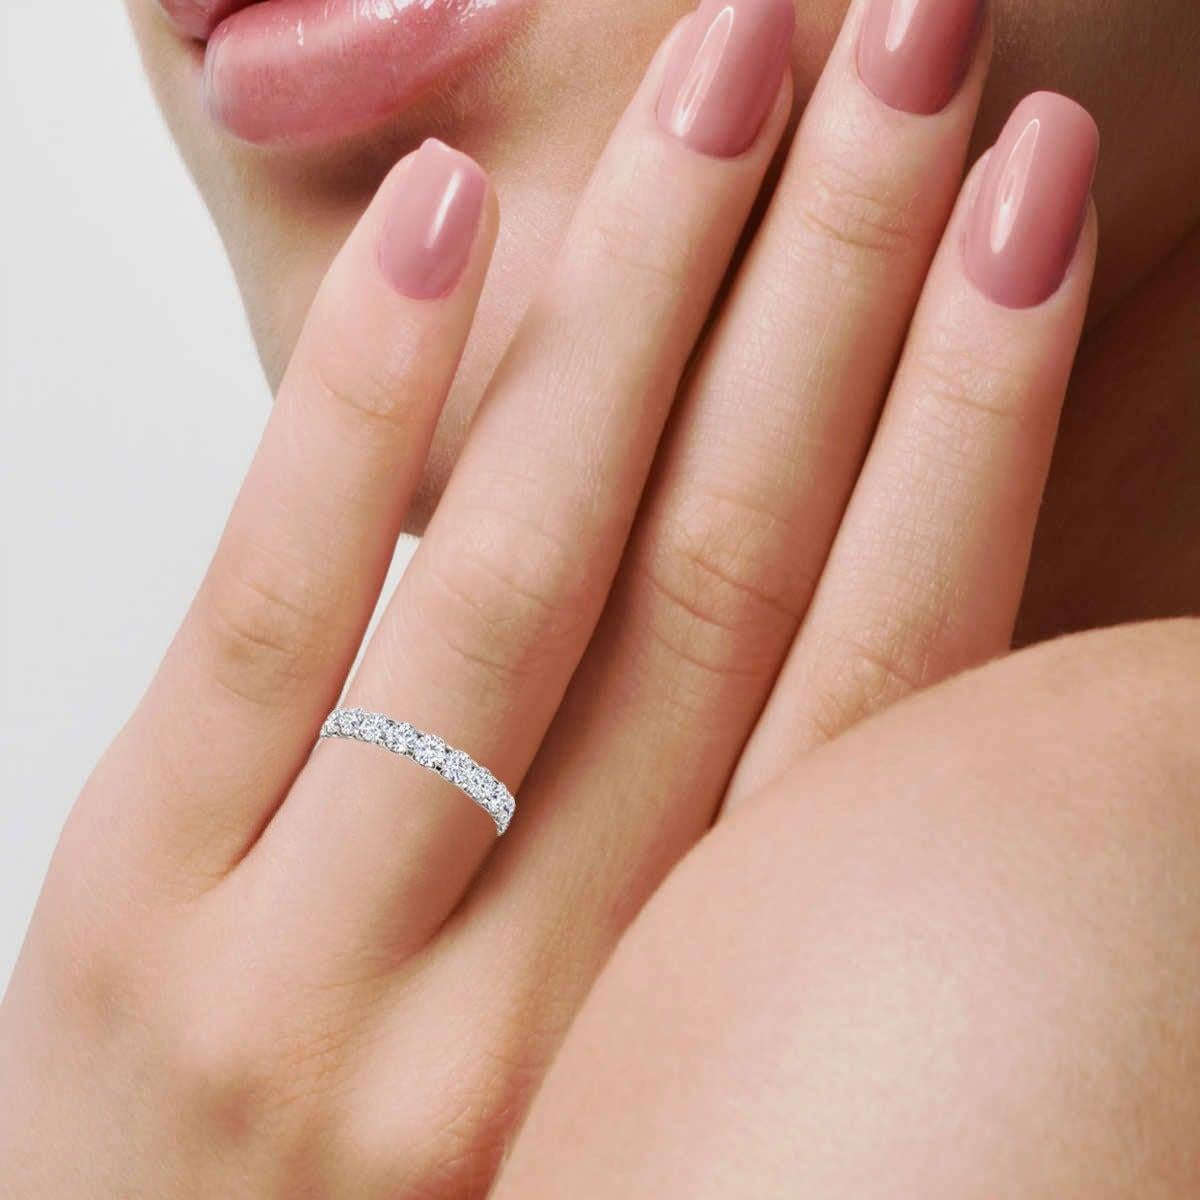 For Sale:  14k White Gold Valerie Micro-Prong Diamond Ring '1 Ct. Tw' 3